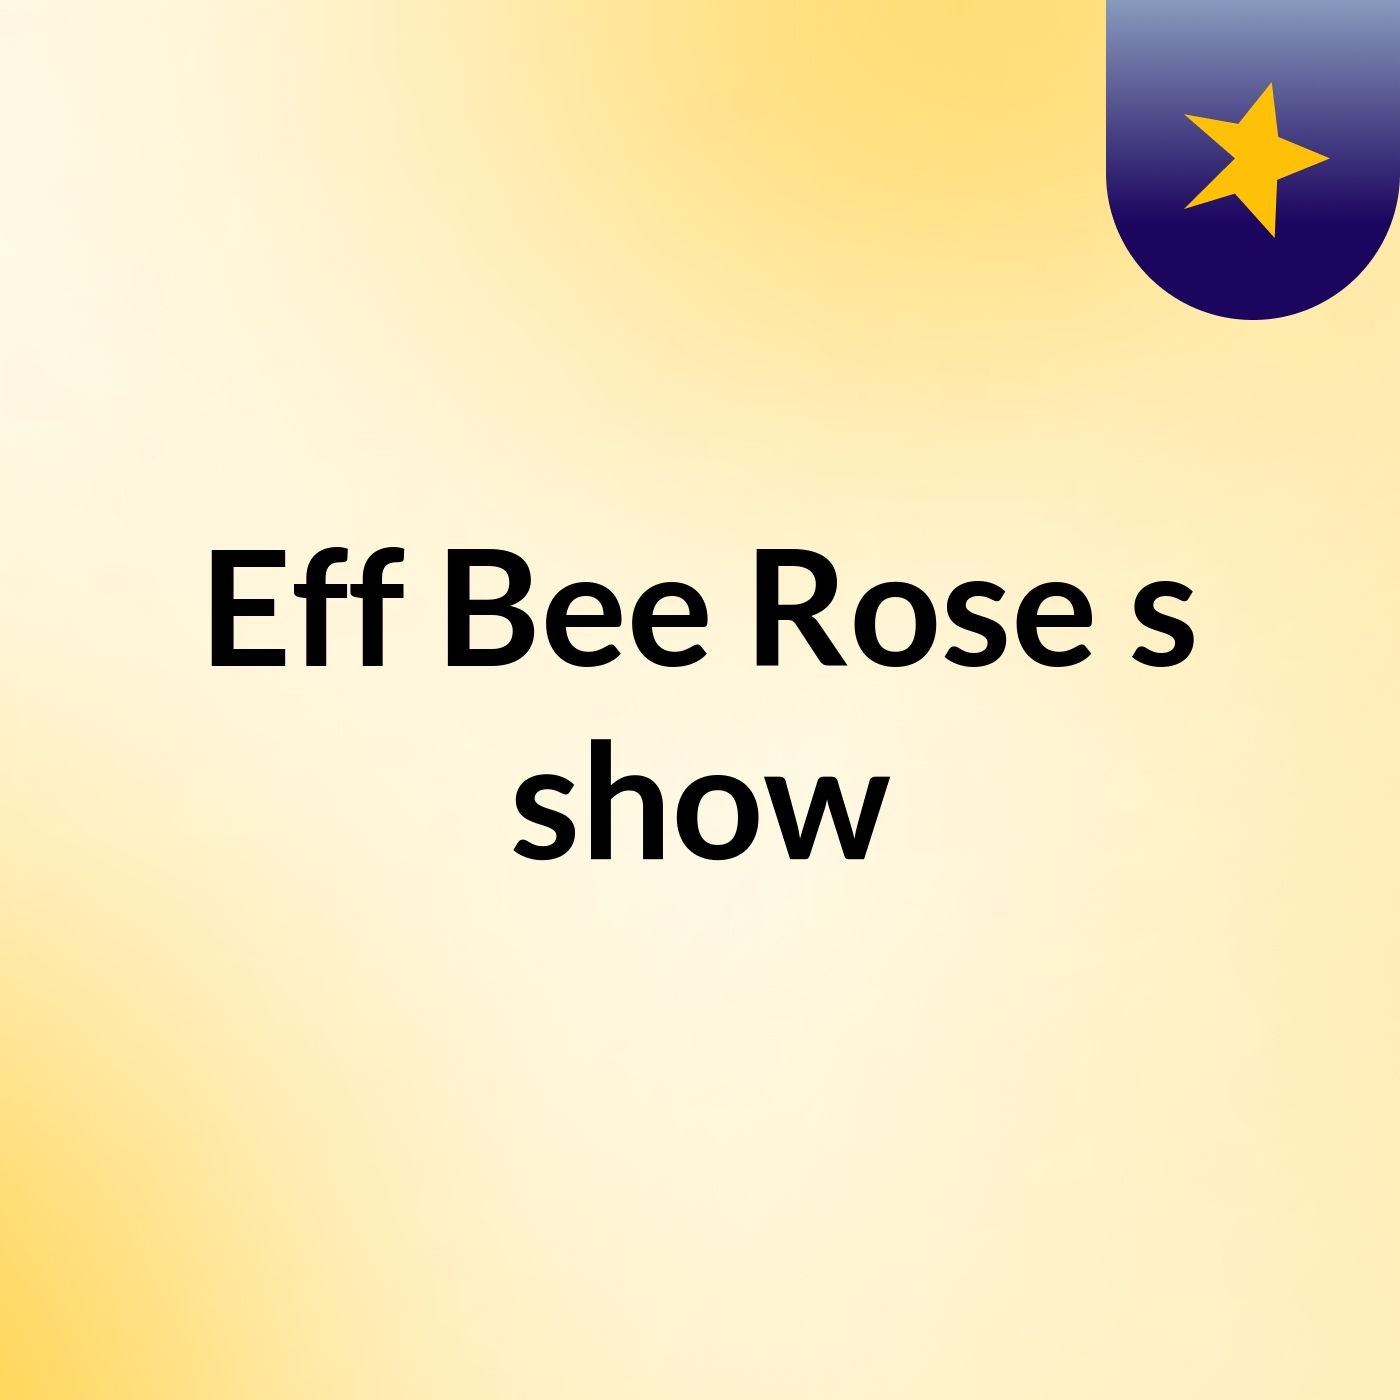 Eff Bee Rose's show